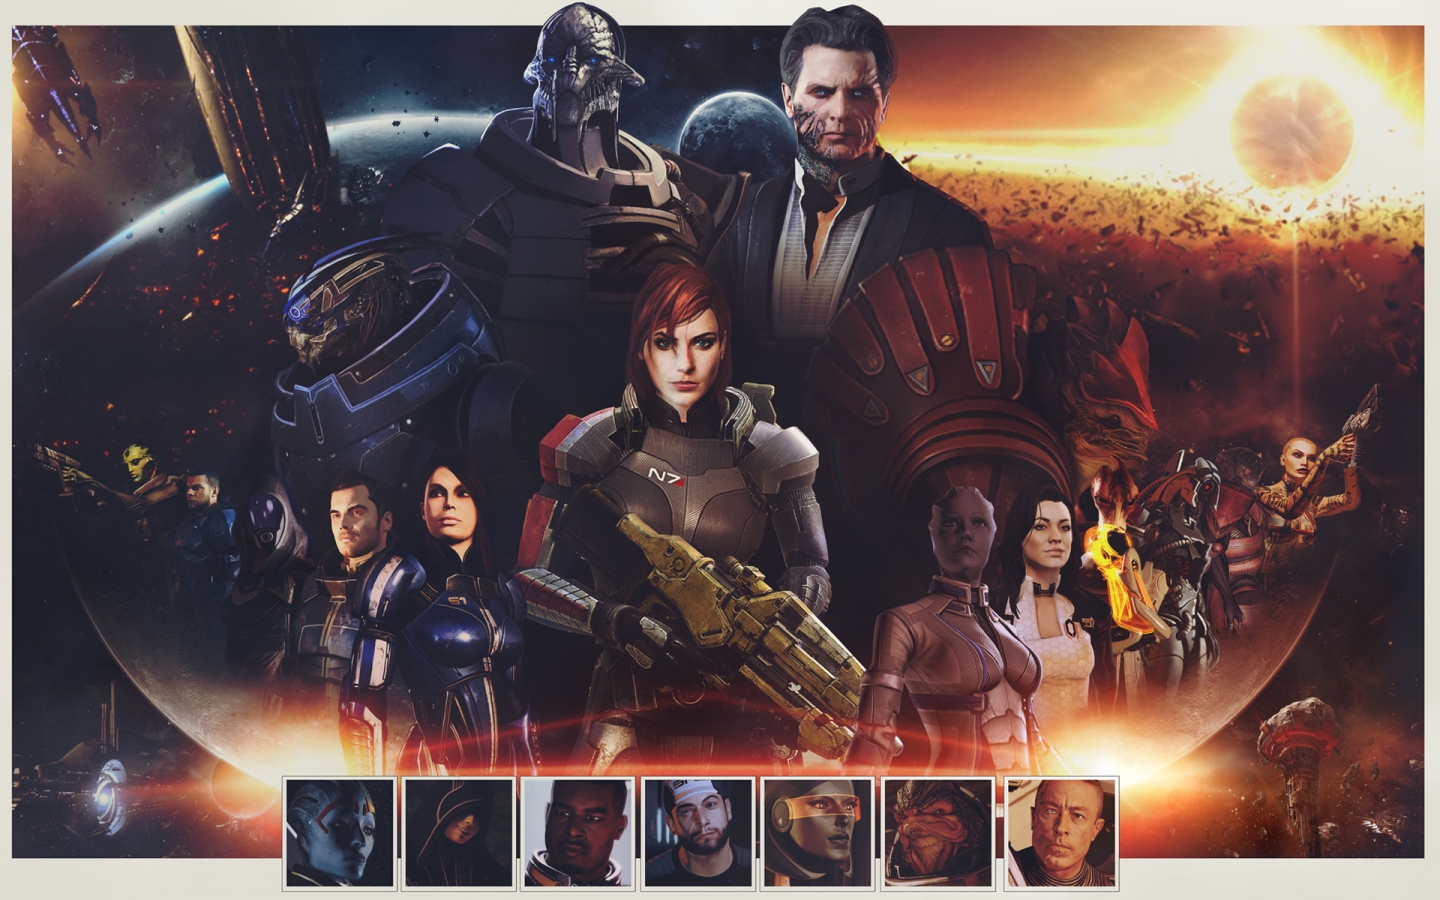 Mass Effect Zaeed Massani for 1440 x 900 widescreen resolution